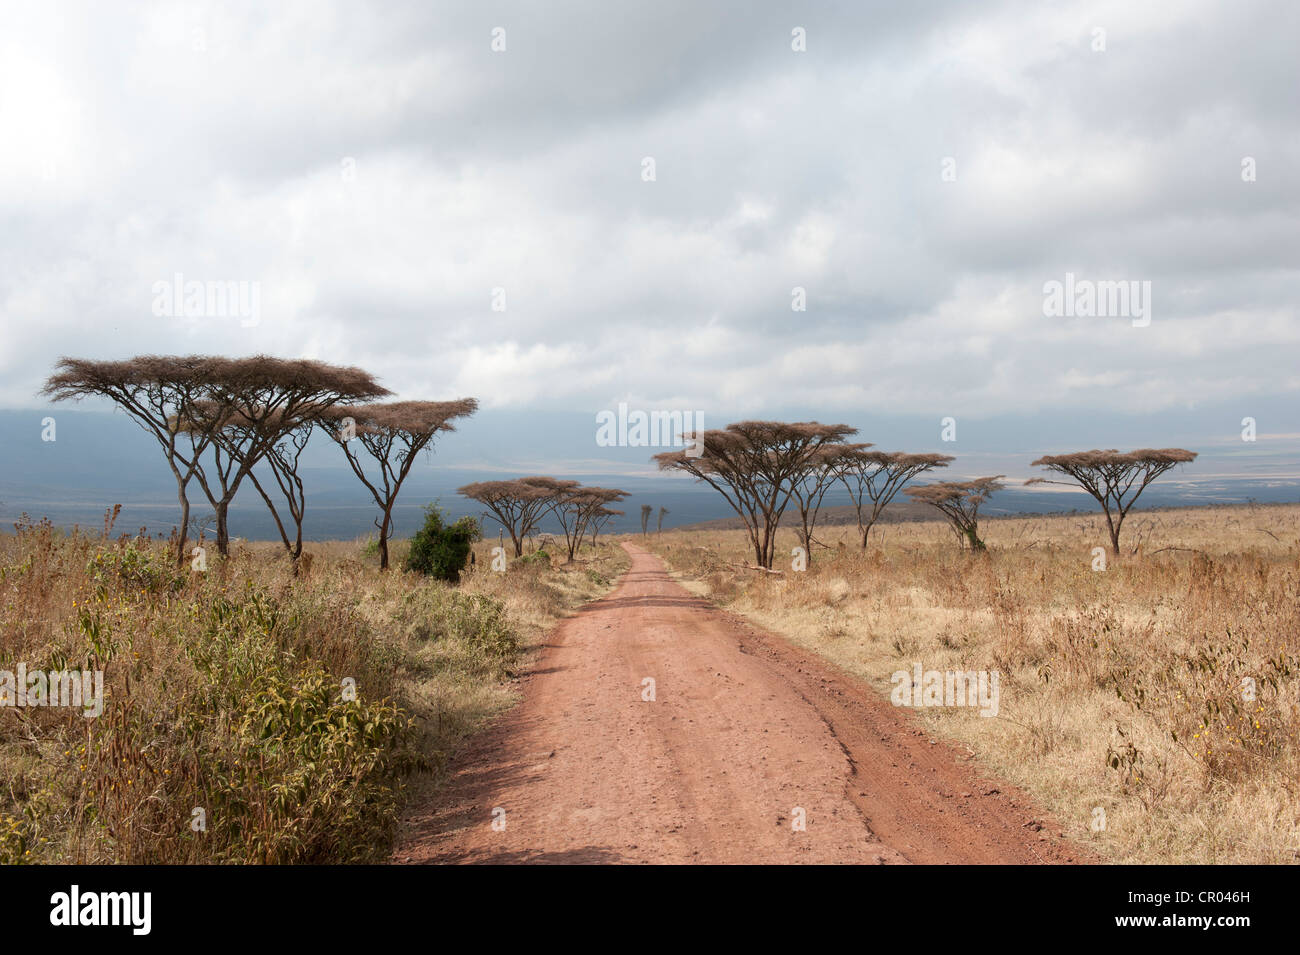 Via nel cratere, prati e pascoli secchi PPS, Umbrella Thorn acacia (acacia tortilis), savana, Ngorongoro Conservation Area Foto Stock